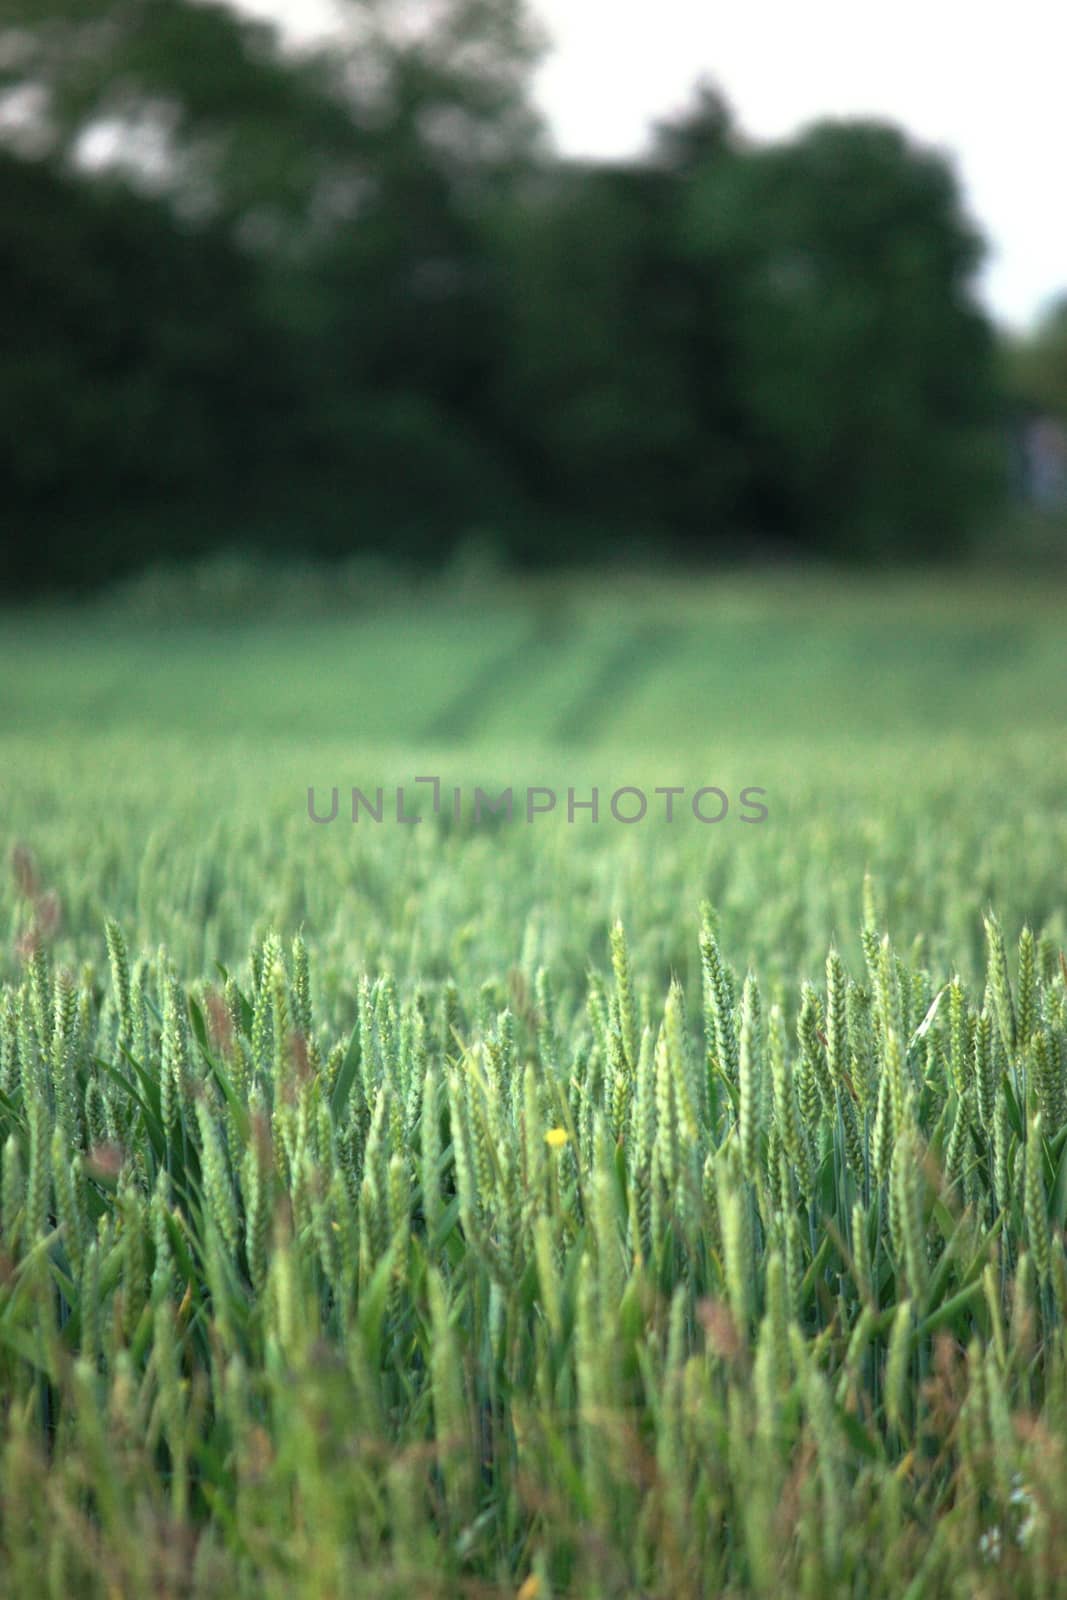 crops in a rural field by chrisga